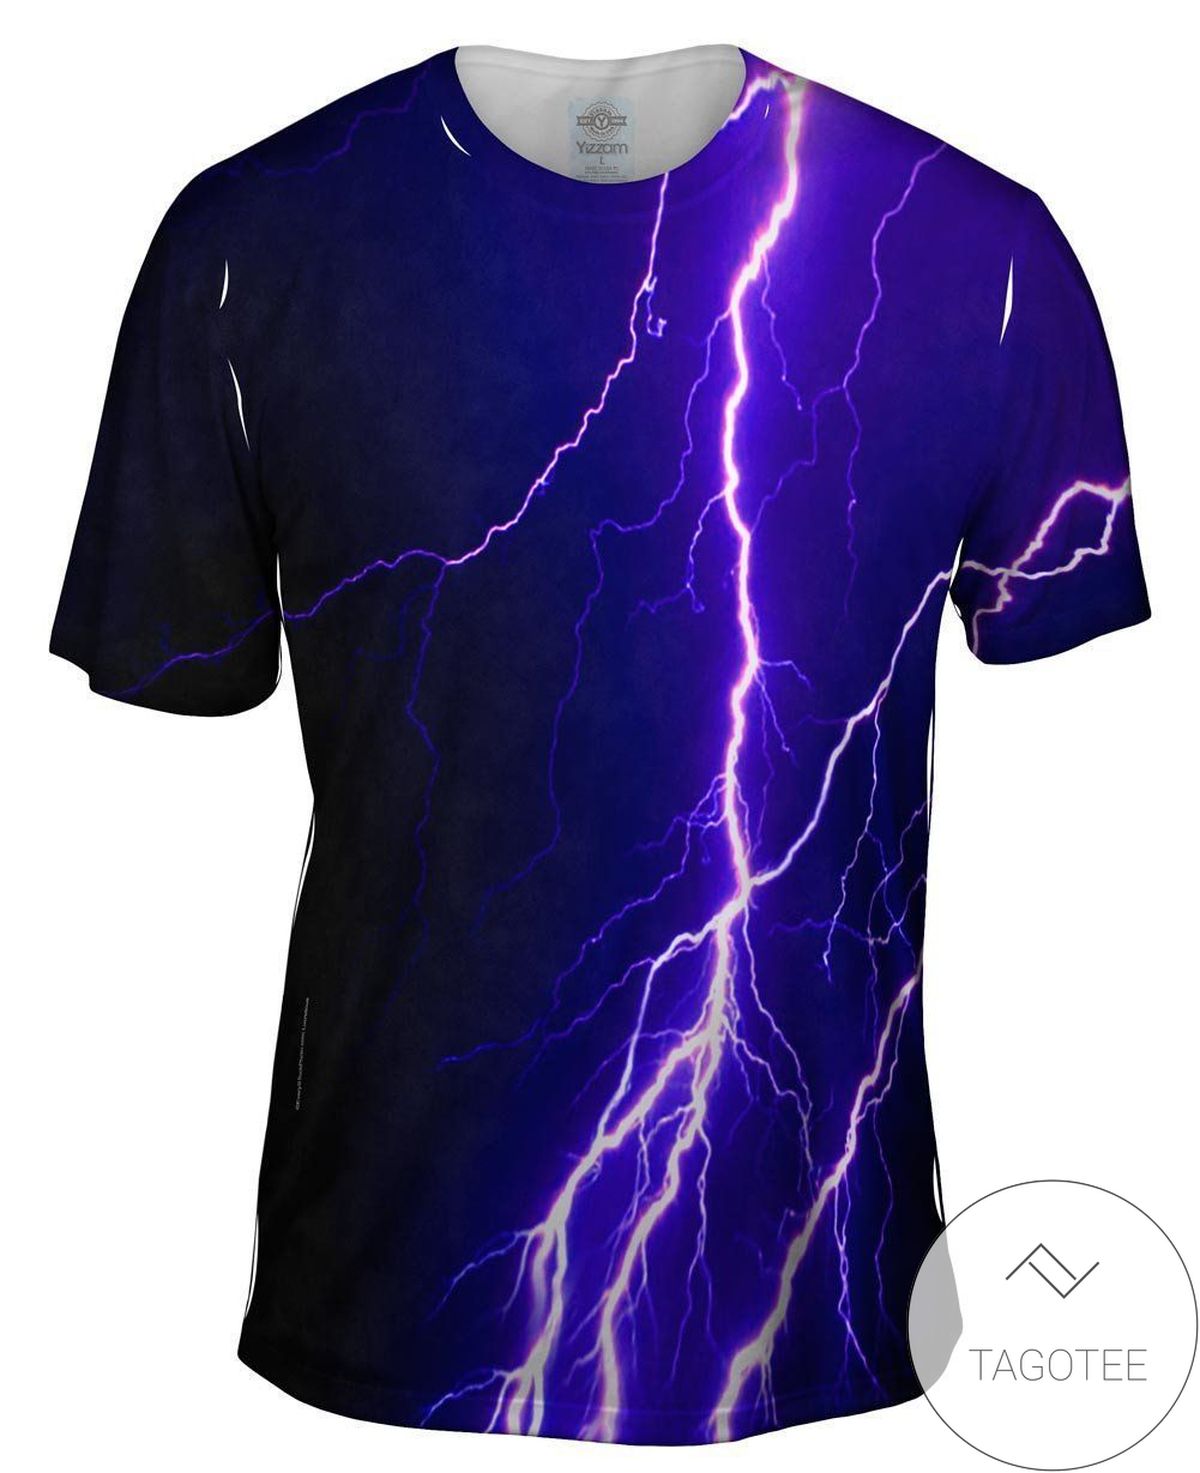 violet storm with lightning dice